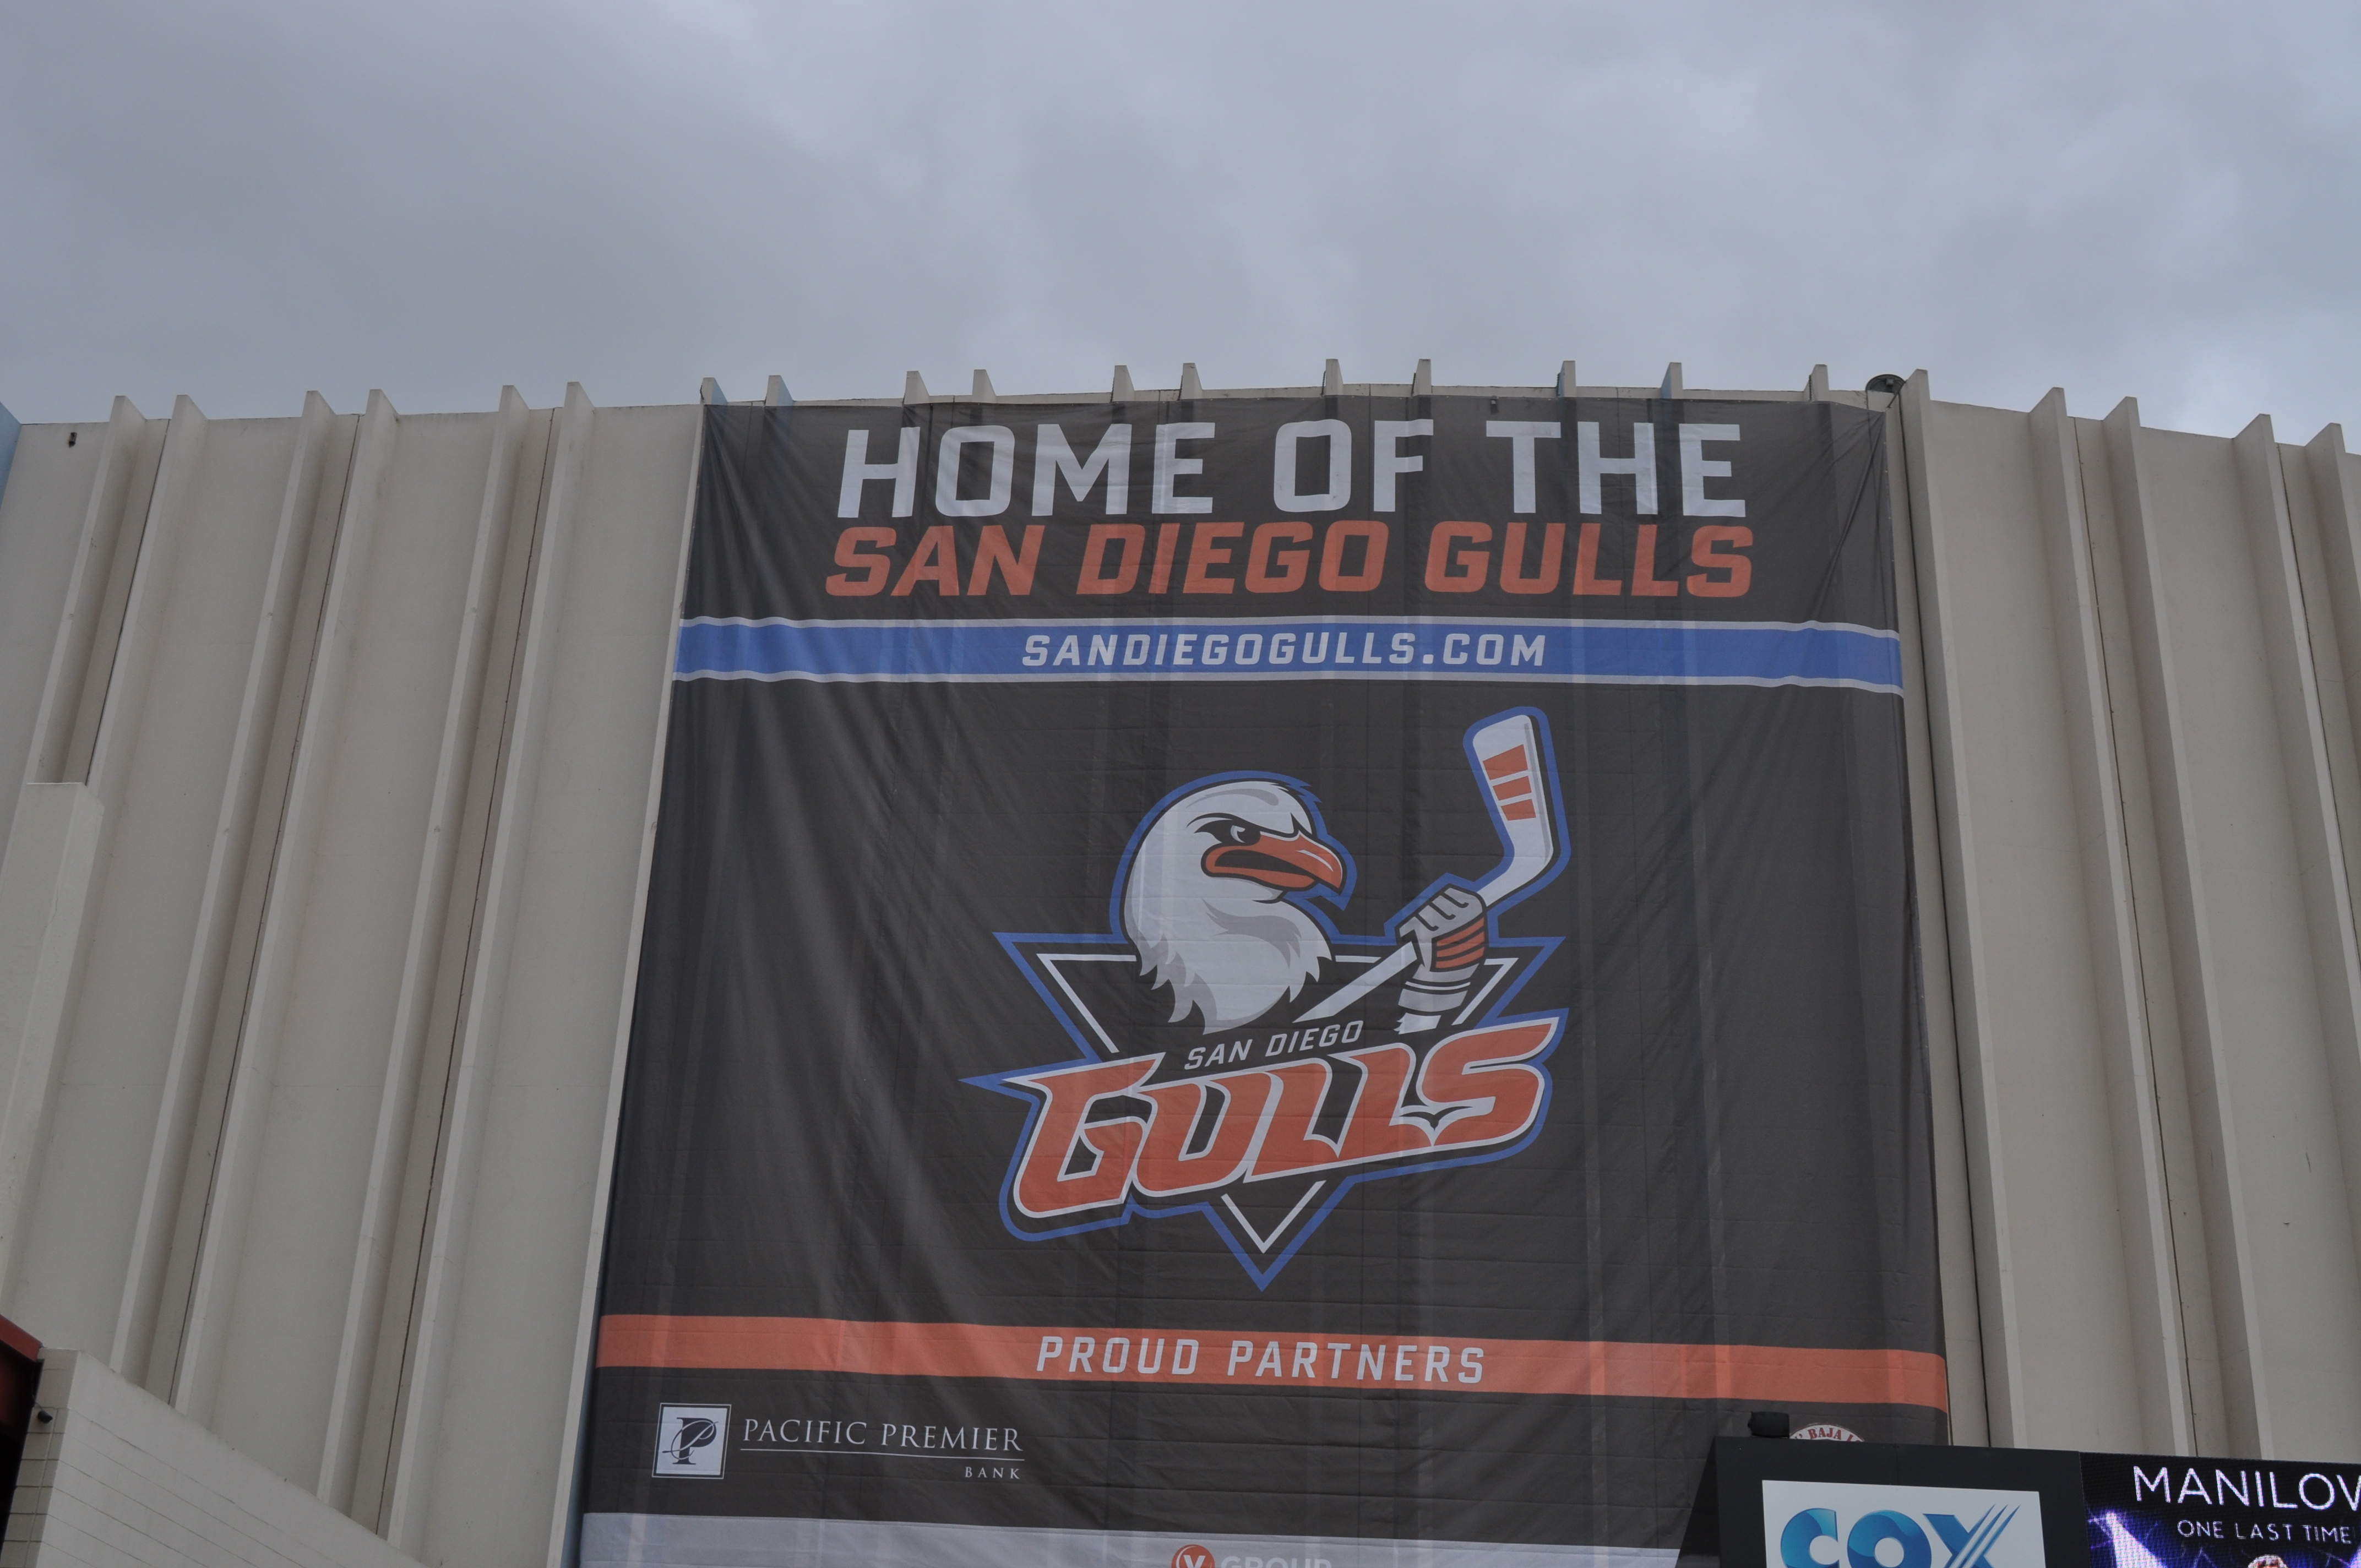 San Diego Gulls on X: Watch the newest episode of Gulls All